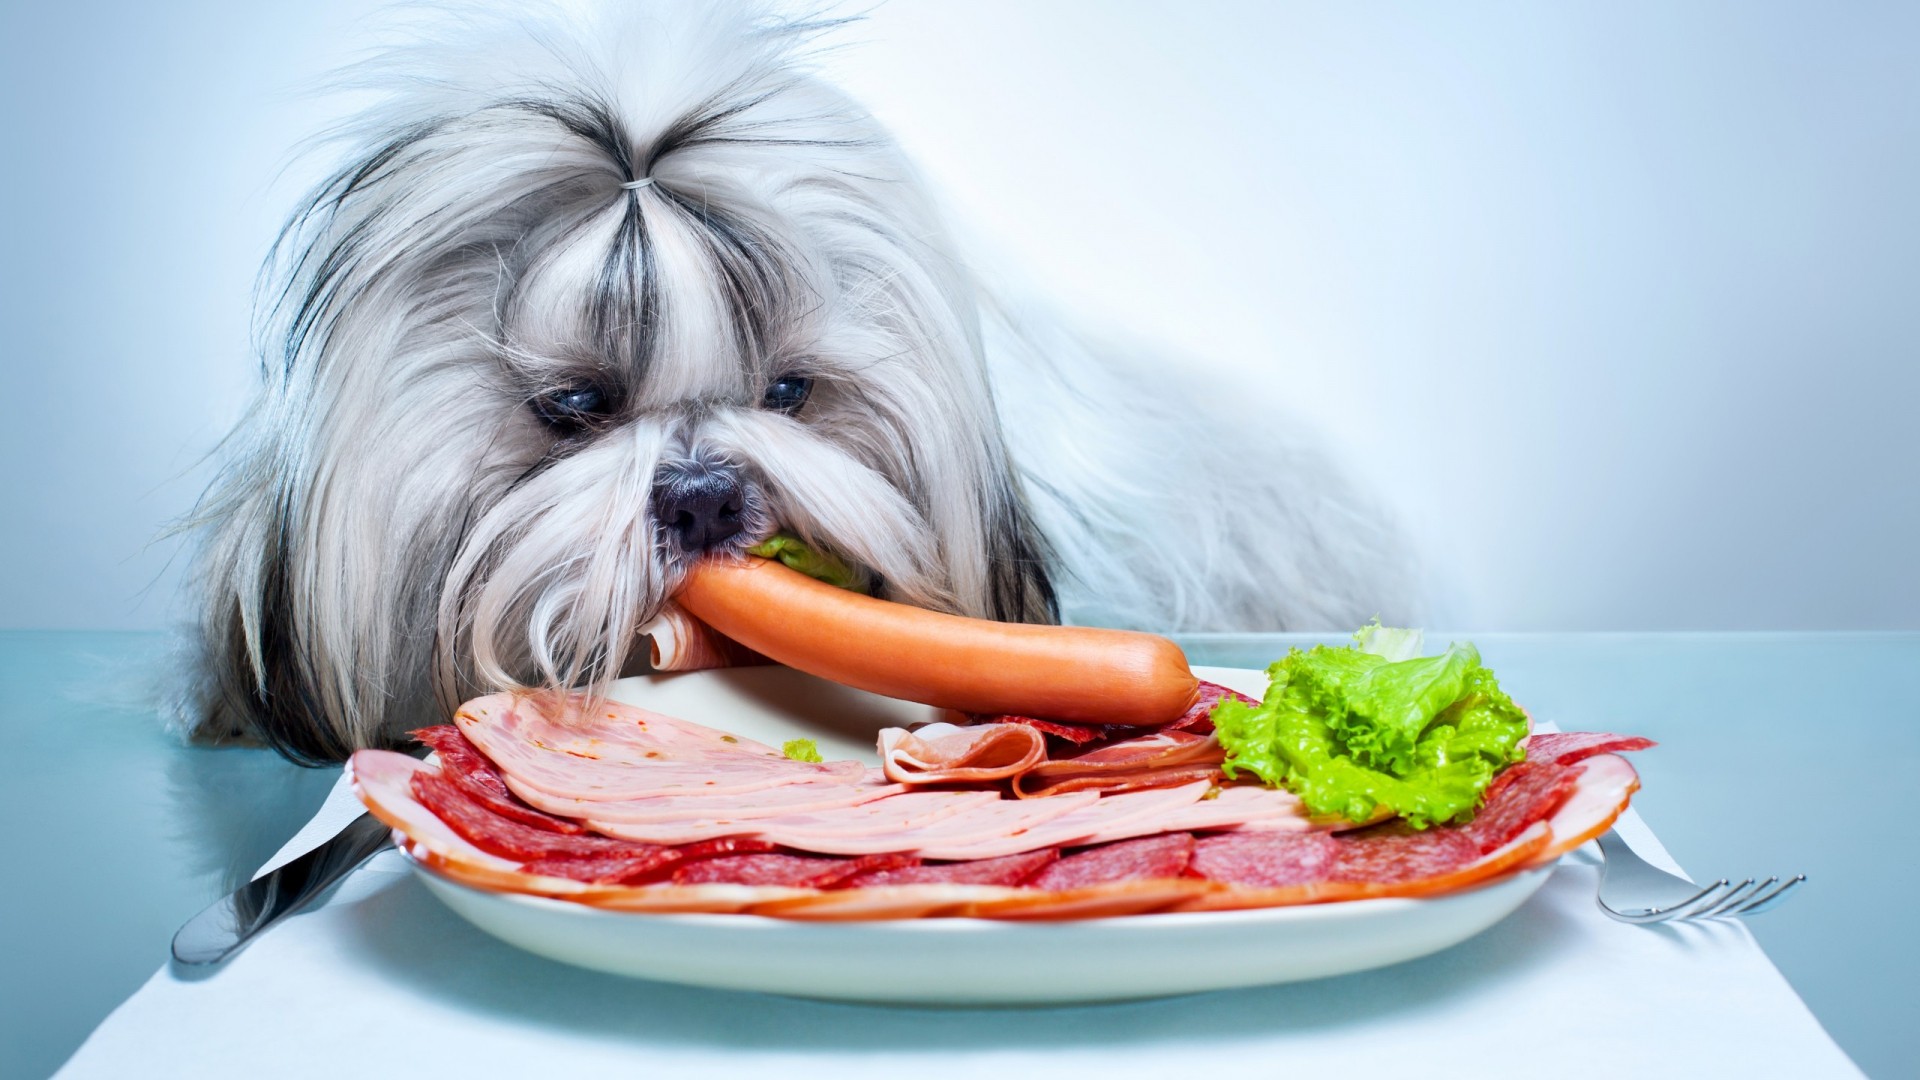 General 1920x1080 animals dog pet food meat vegetables plates salami simple background eating mammals sausage fork blue eyes